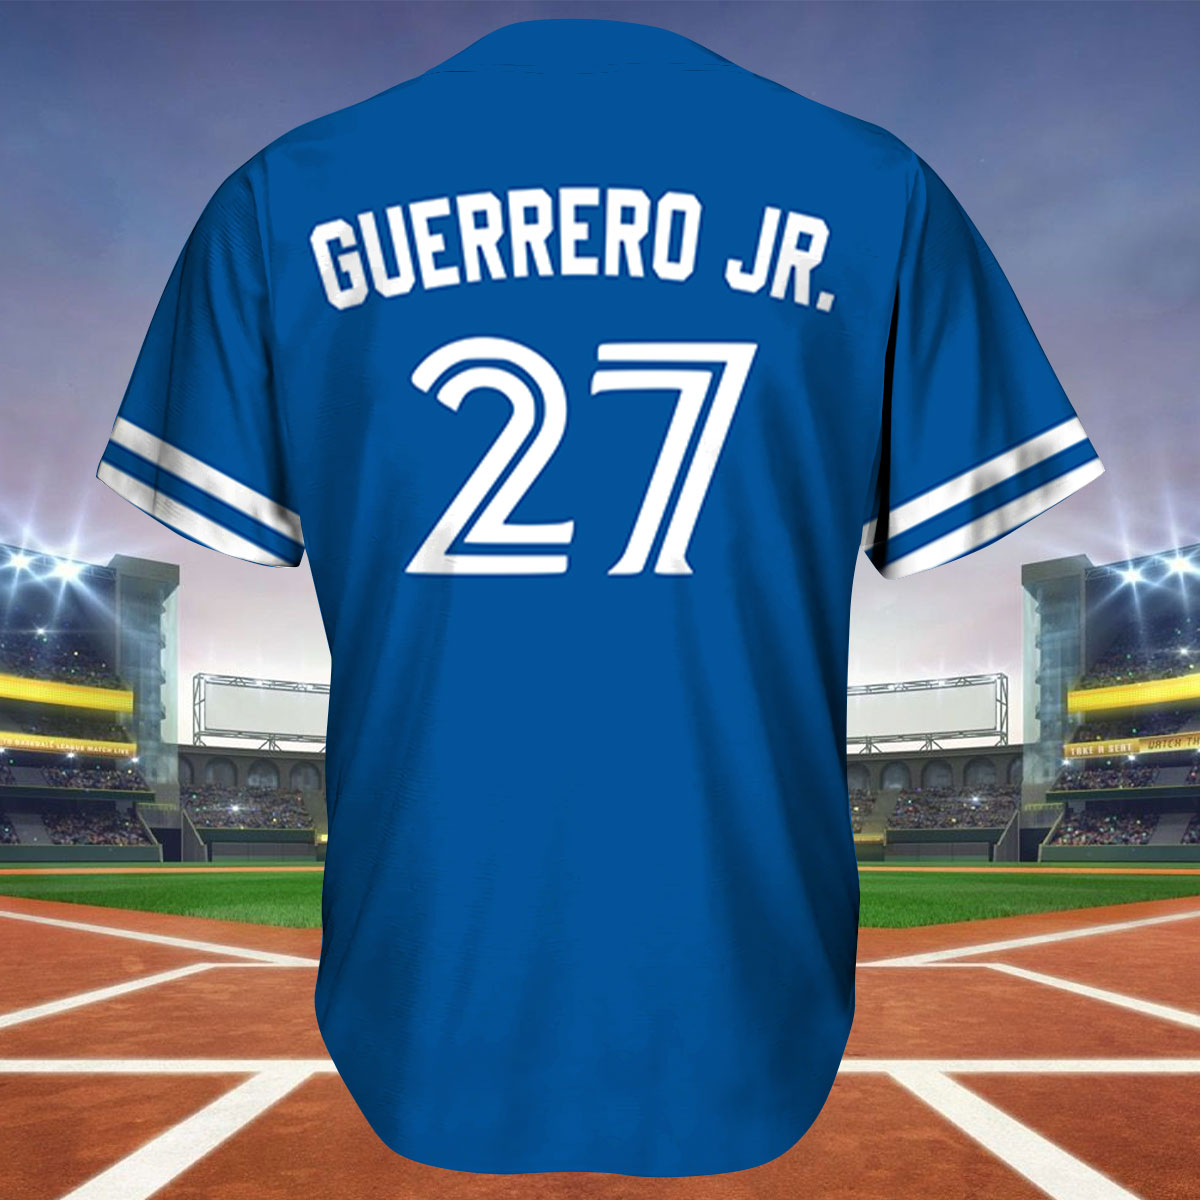 Vladimir Guerrero Jr. 27 Toronto Blue Jays Shirt, hoodie, sweater